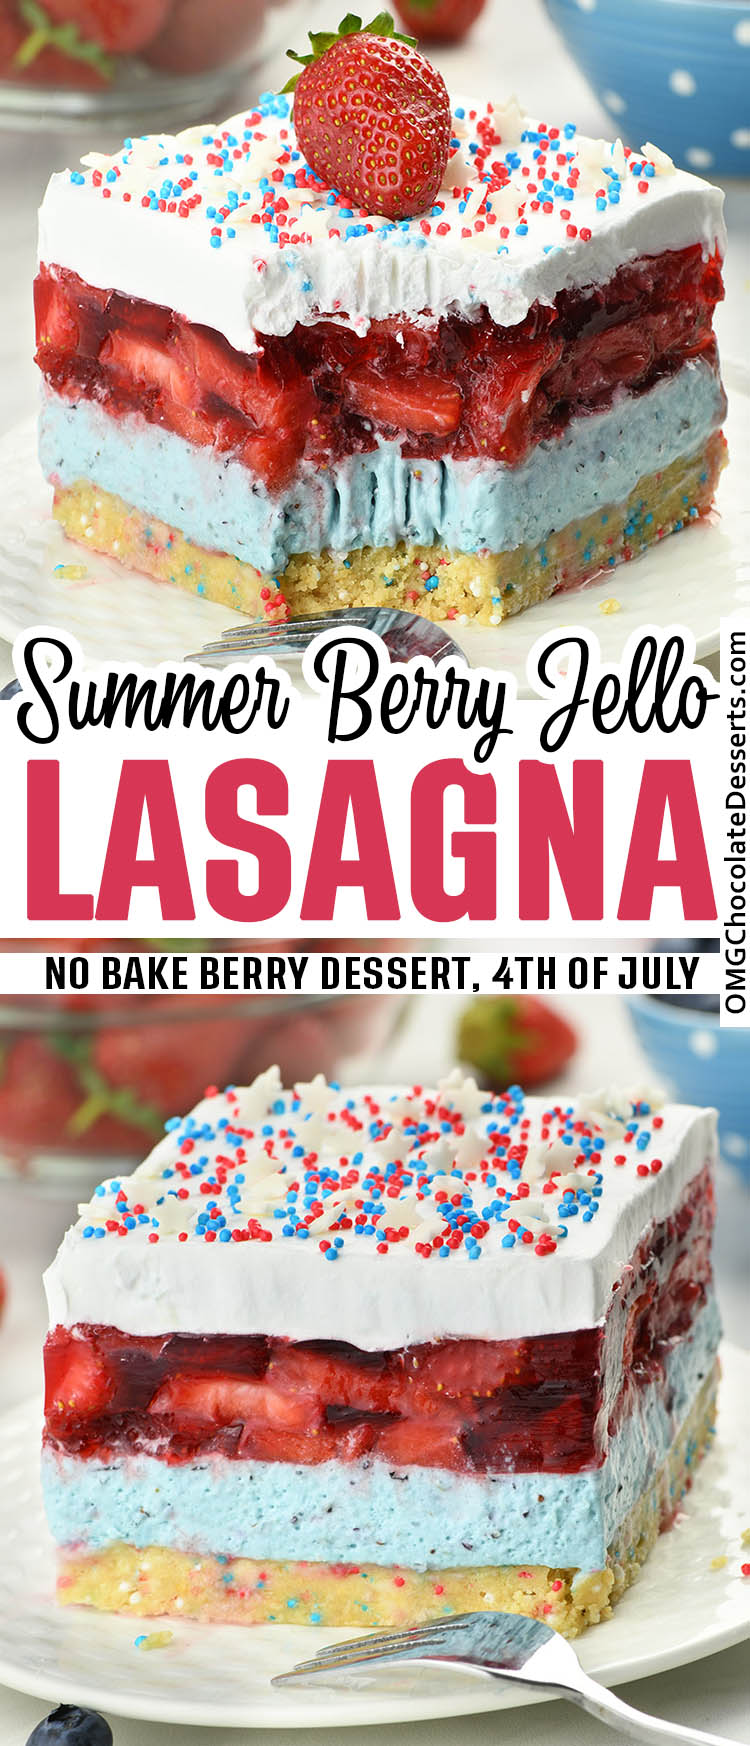 Summer Berry Jello Lasagna